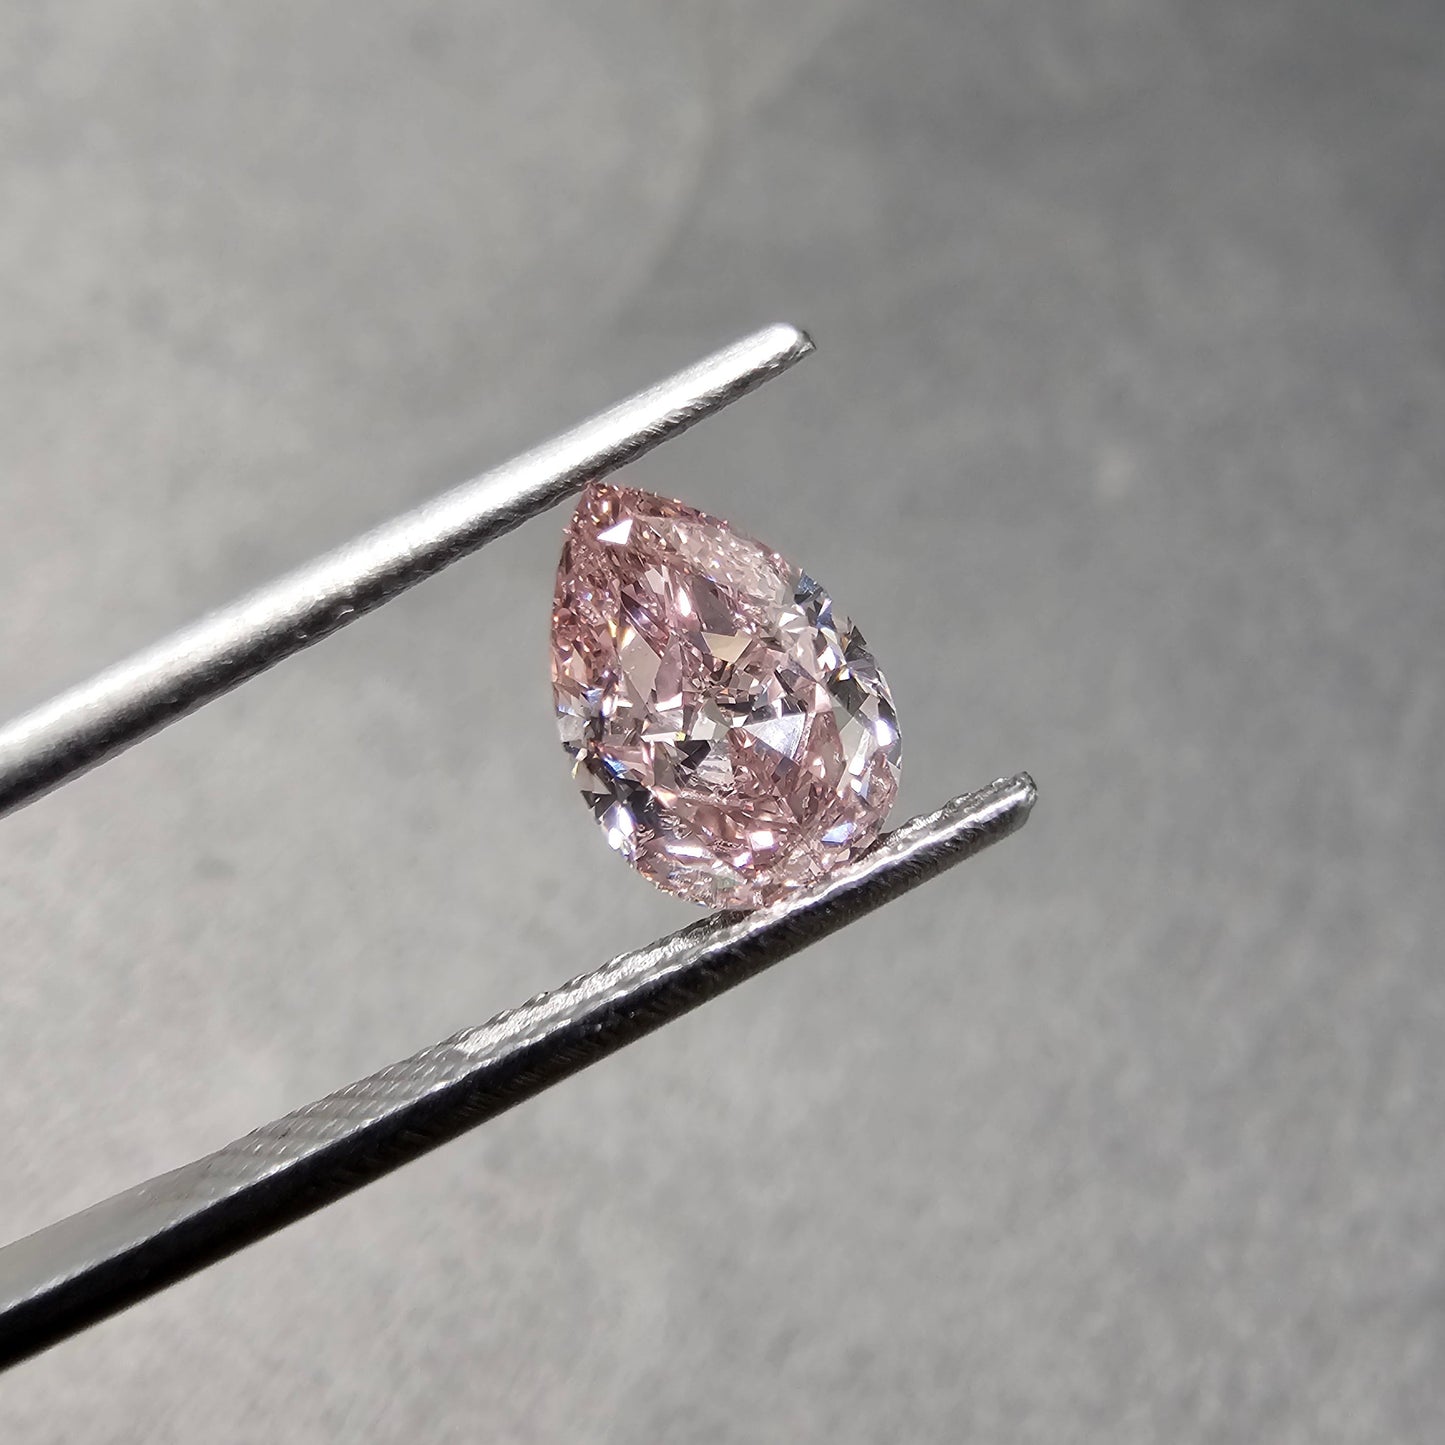 1.02 Carats Total  Fancy Pink  GIA Certified Diamond  Pear Shape Diamond SI2 Clarity  Medium Blue Fluorescence Has the measurements of 1.5 Carat Diamond 